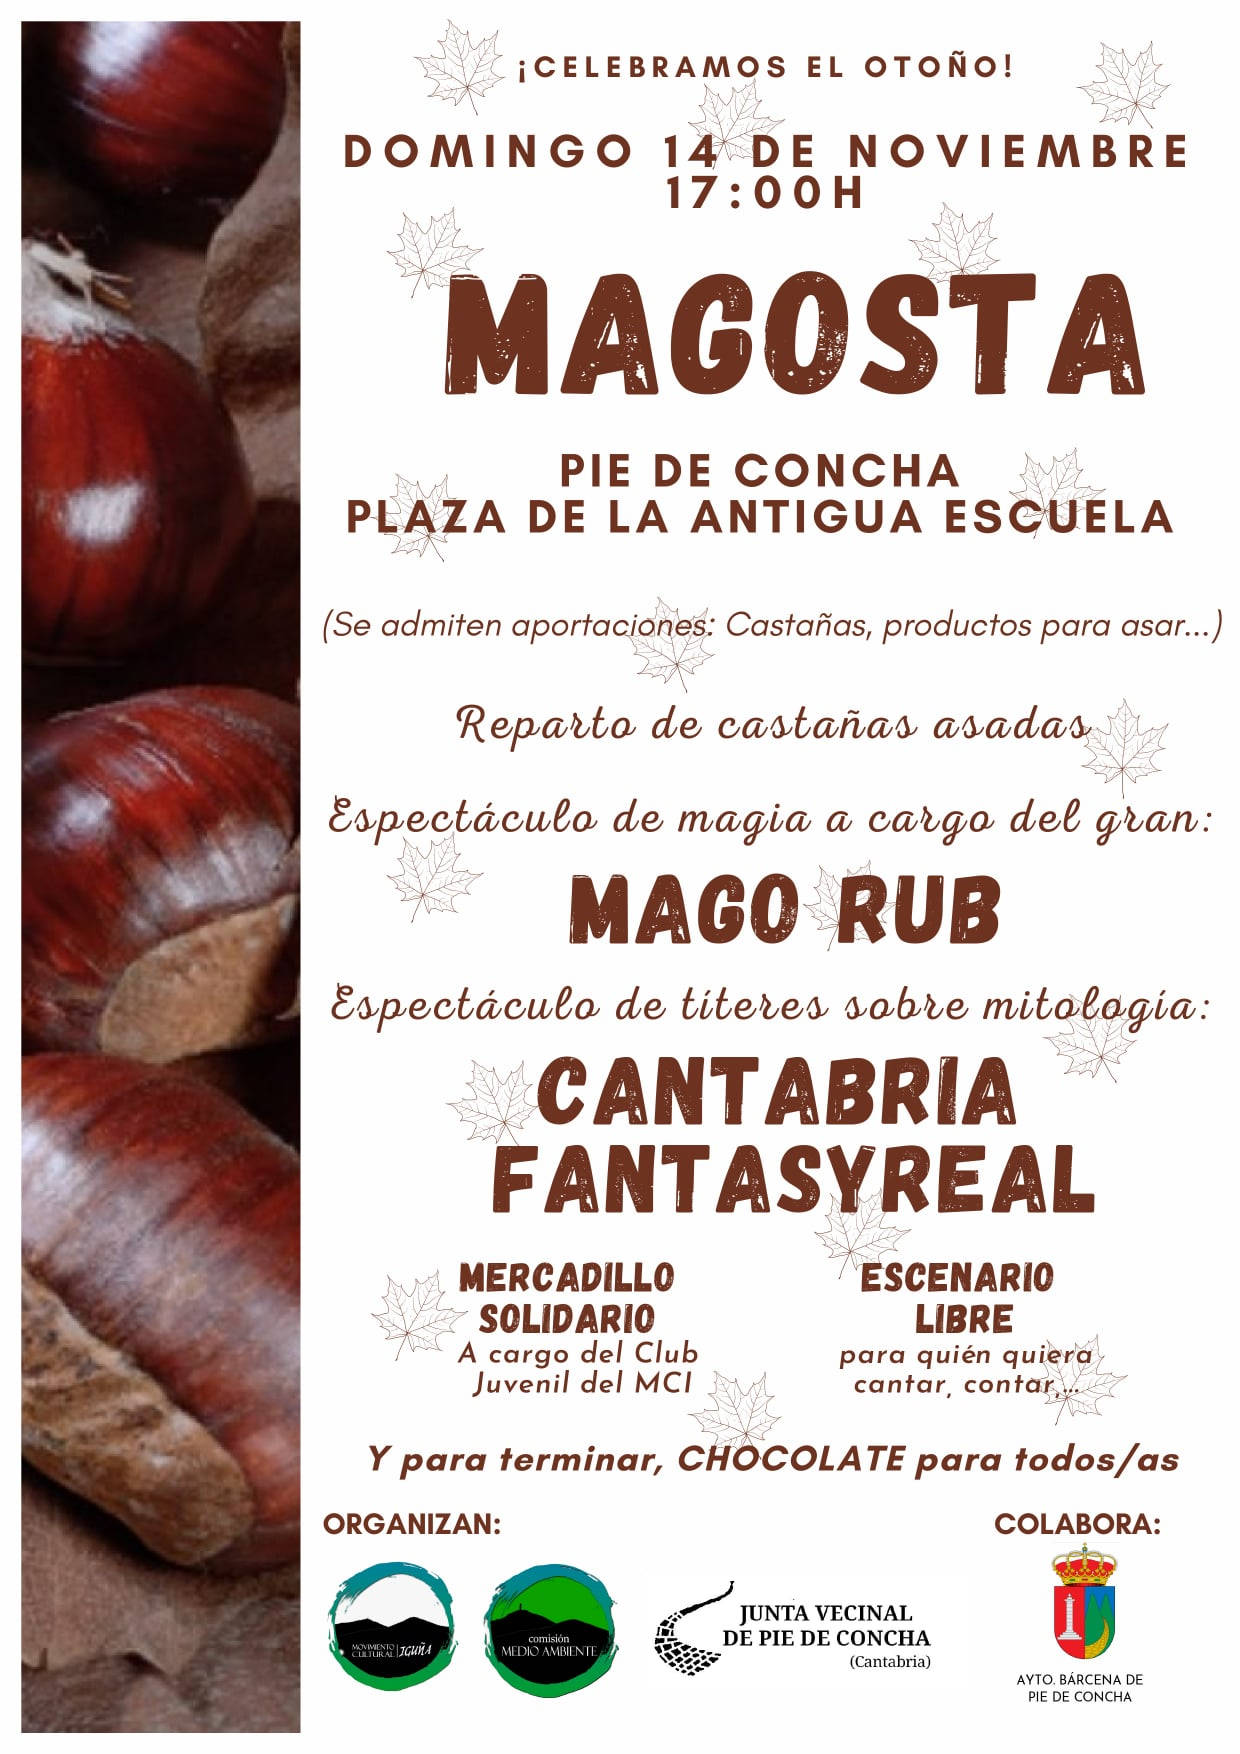 Magosta – Pie de Concha